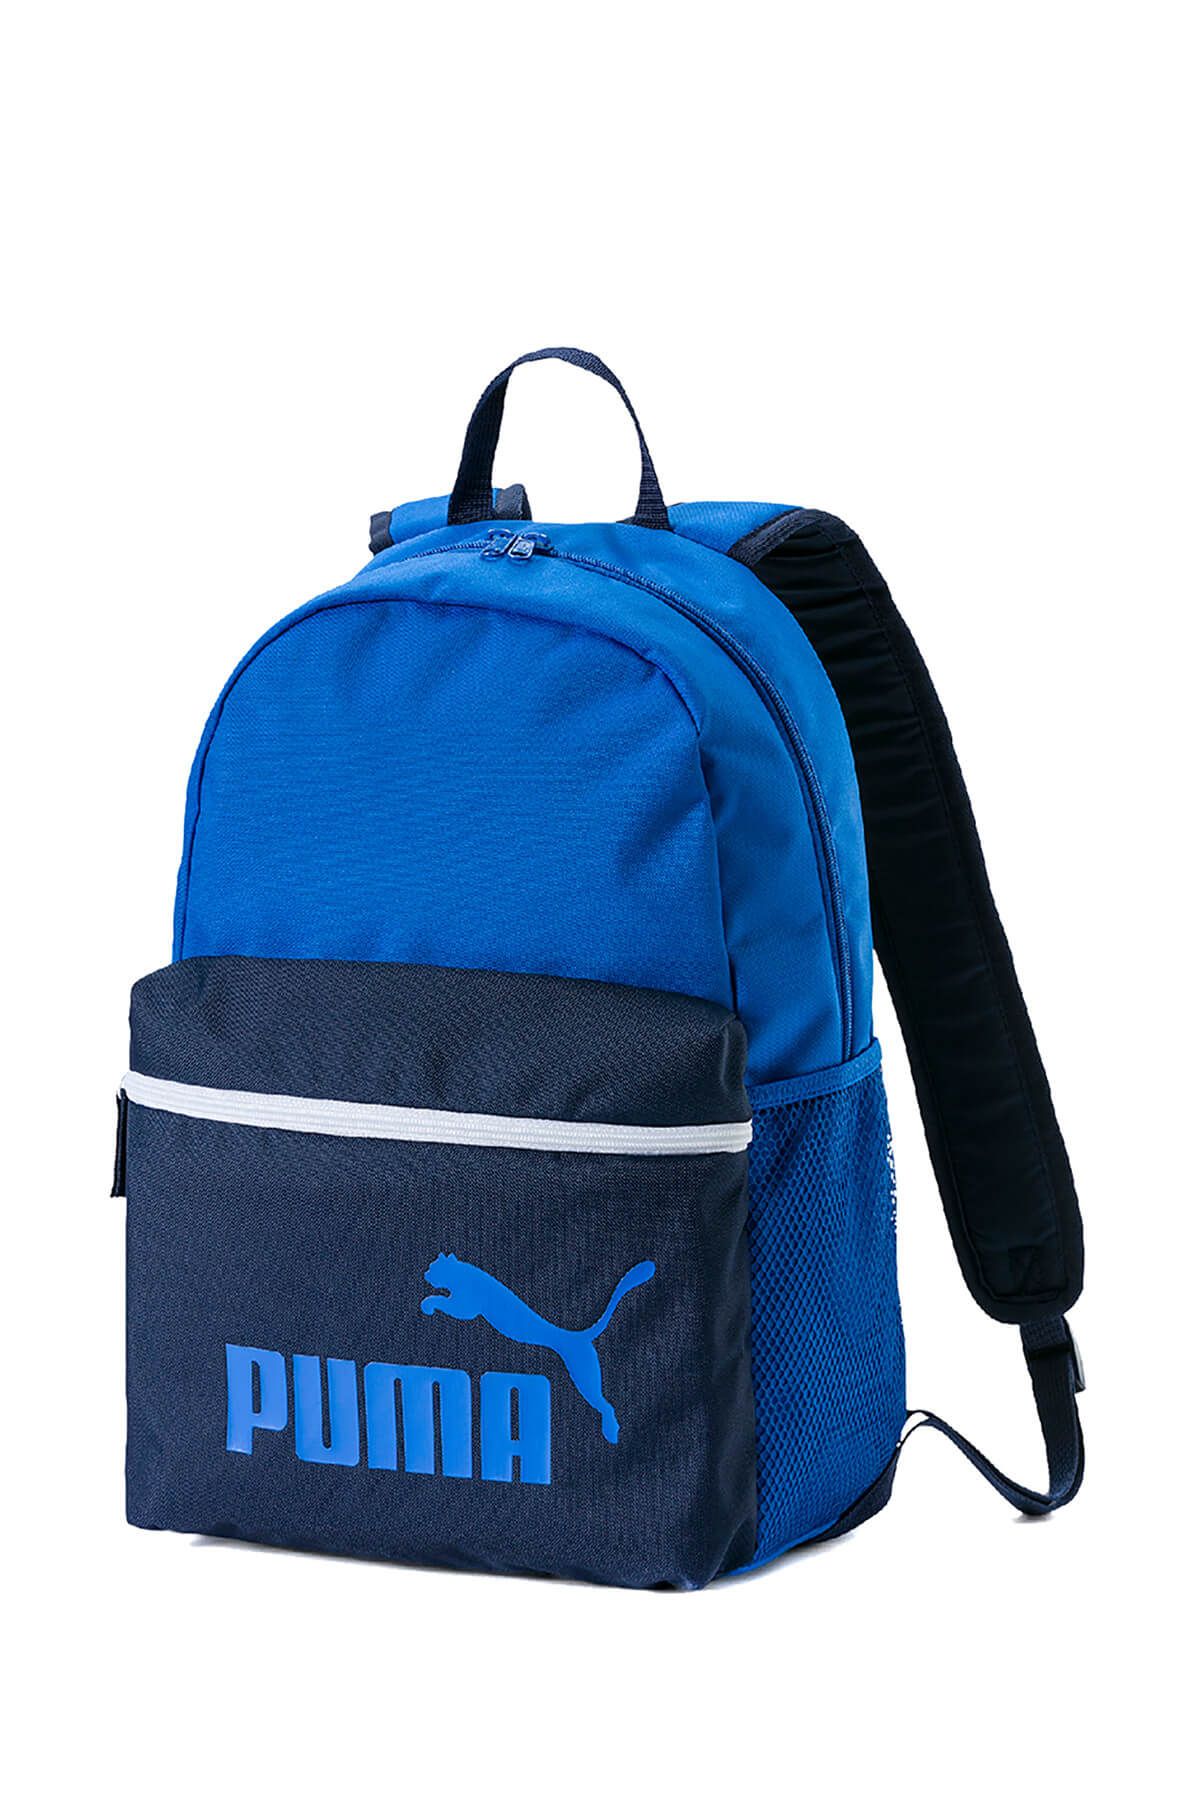 Puma Unisex Sırt Çantası - Phase Backpack - 07548703